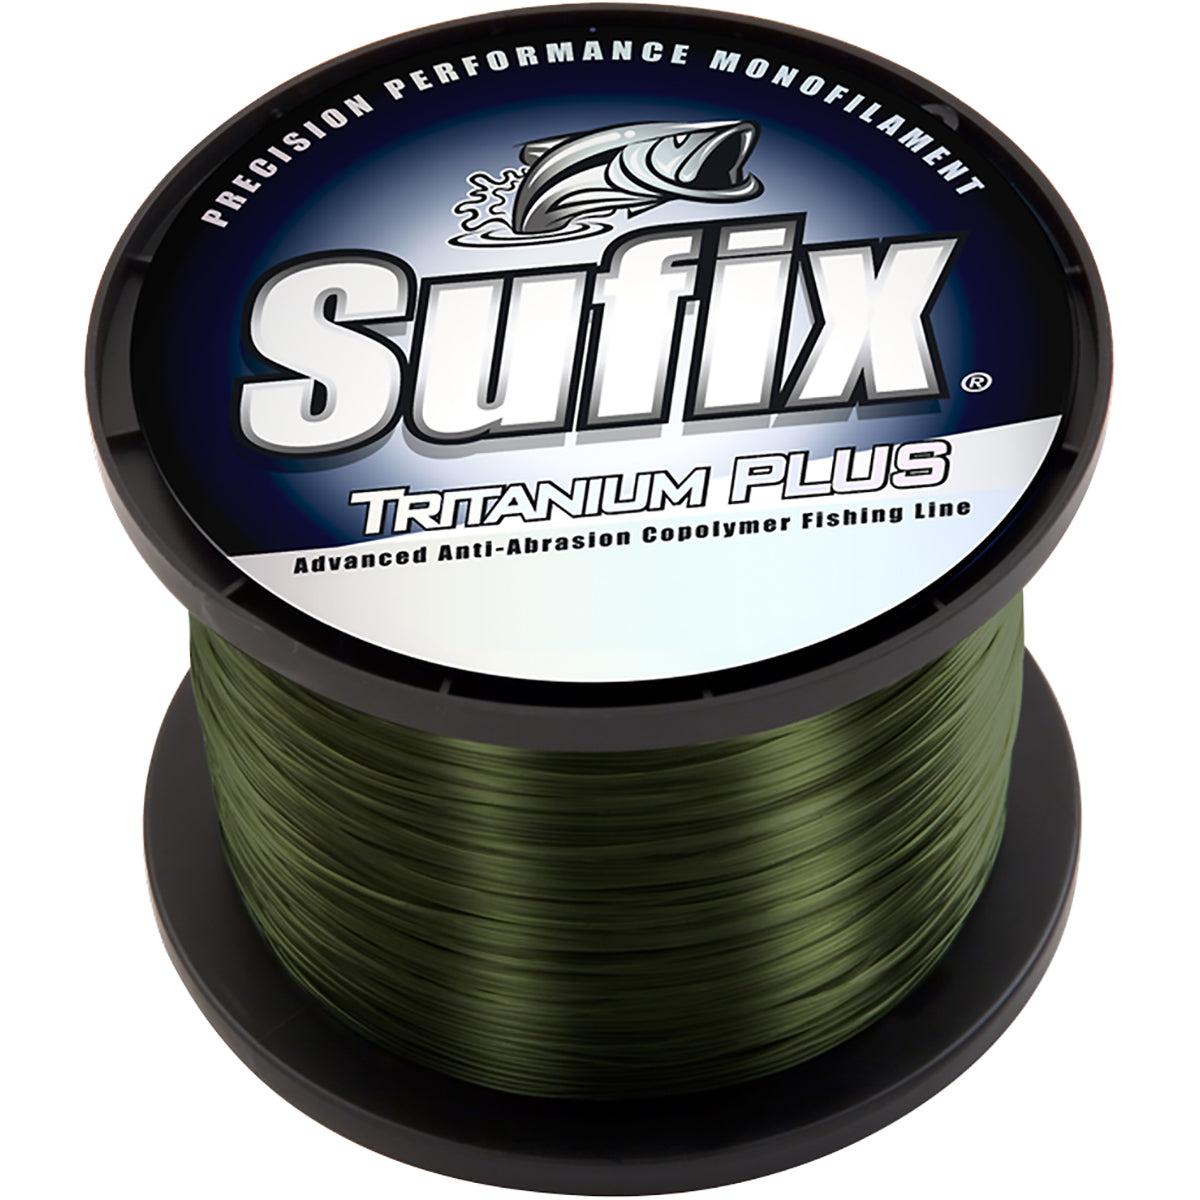 Sufix Tritanium Plus Dark Green Fishing Line 4395 yds - 14 lb Test